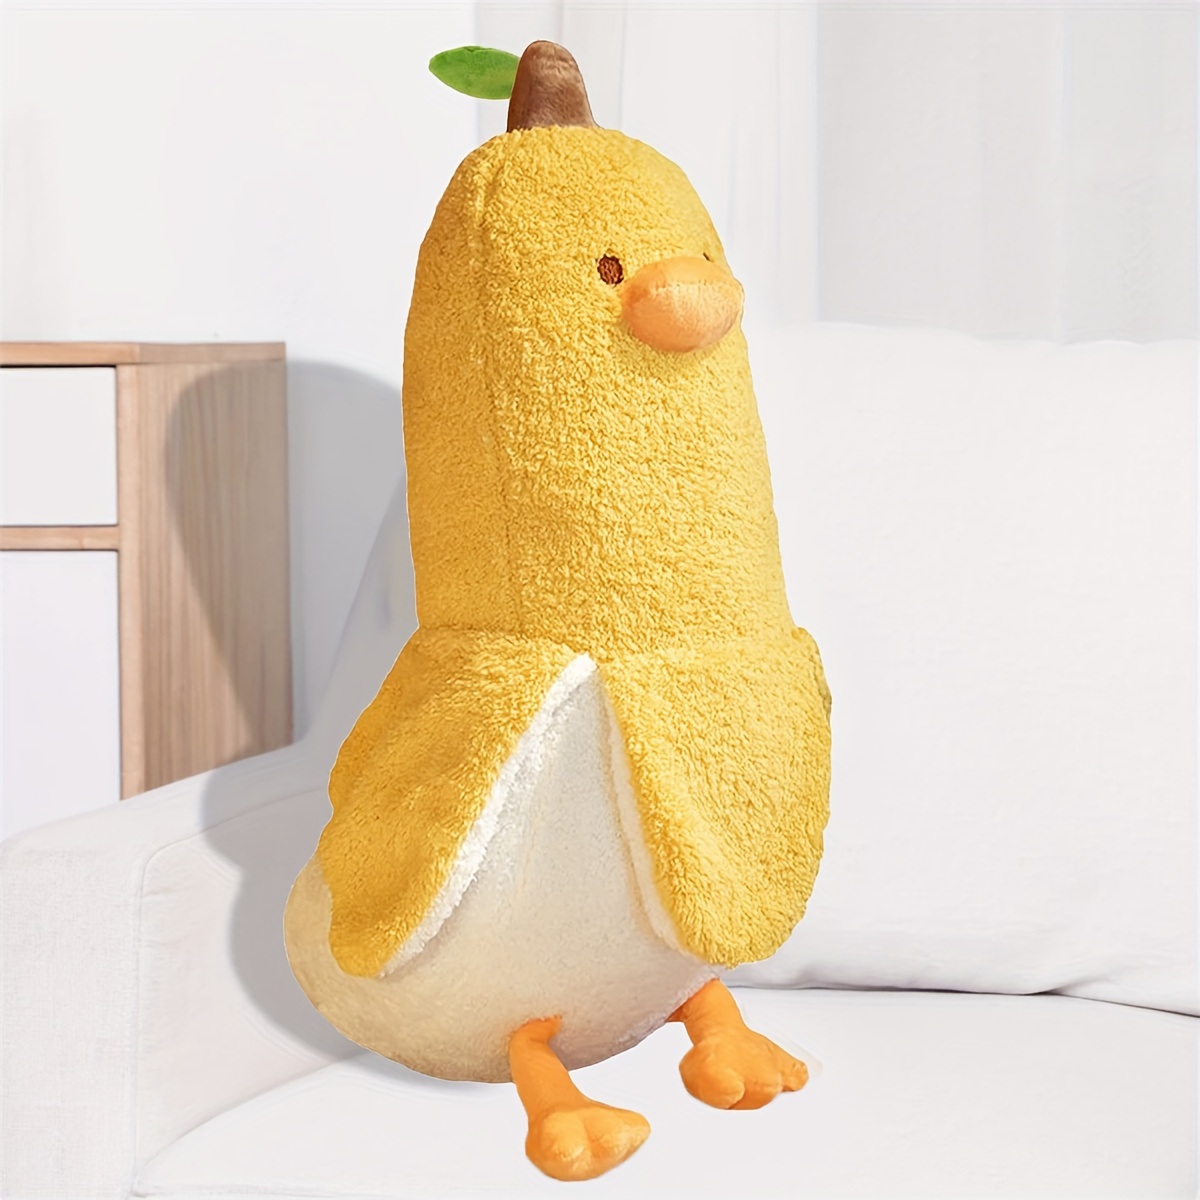 Banana Duck Soft Stuffed Plush Pillow Toy